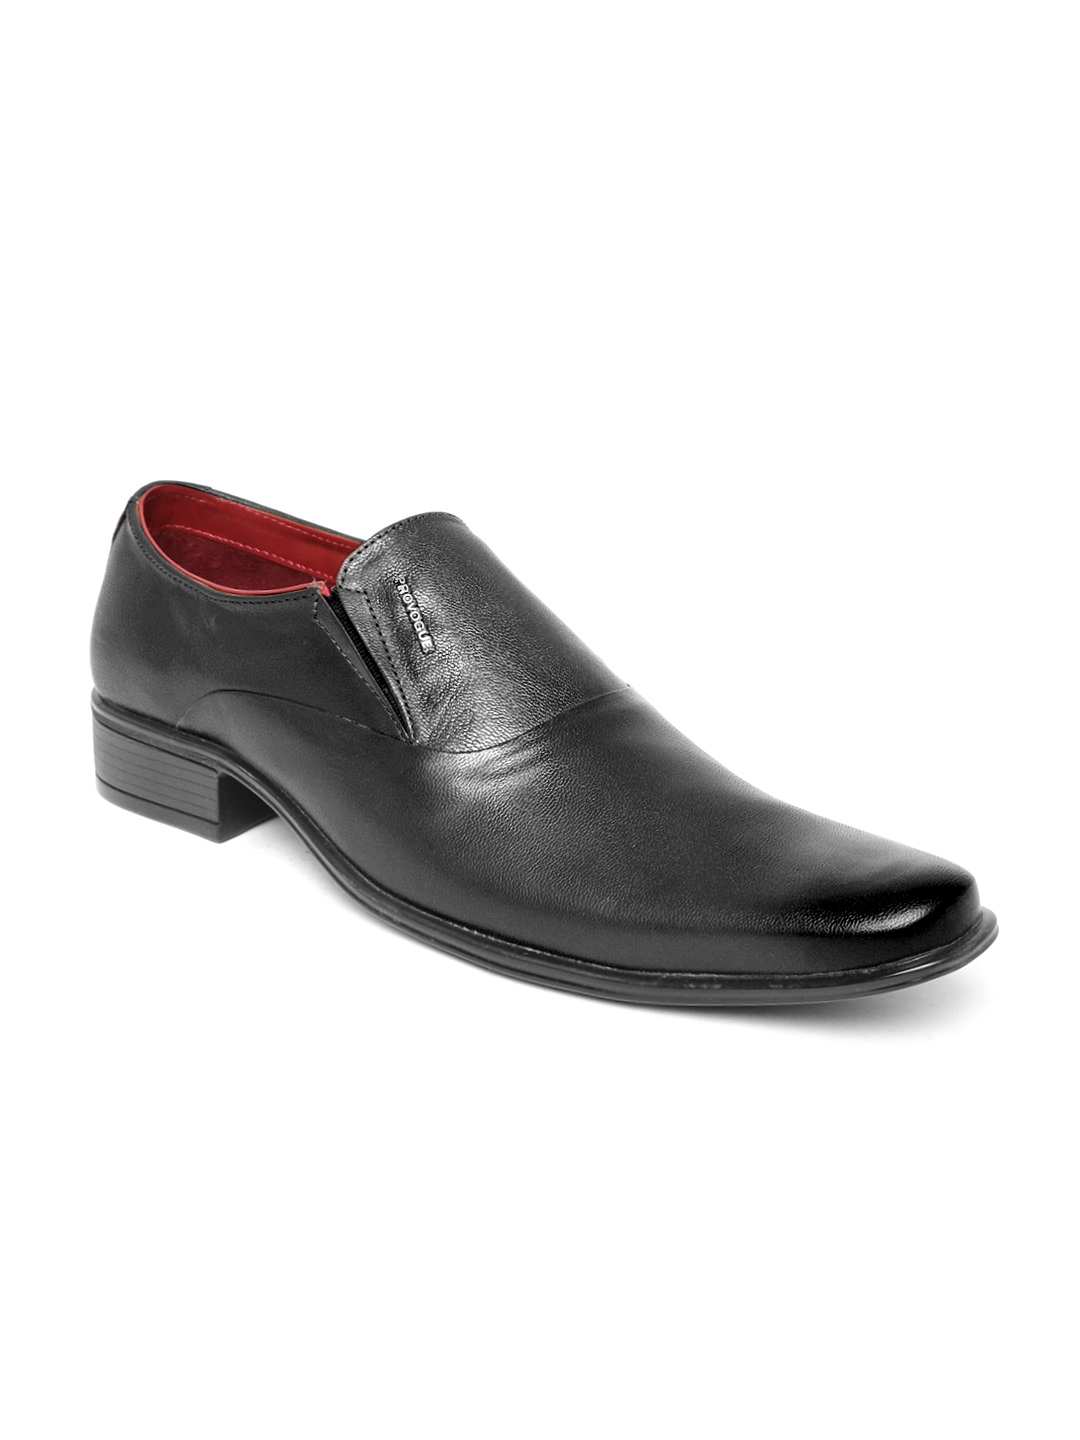 provogue black formal shoes